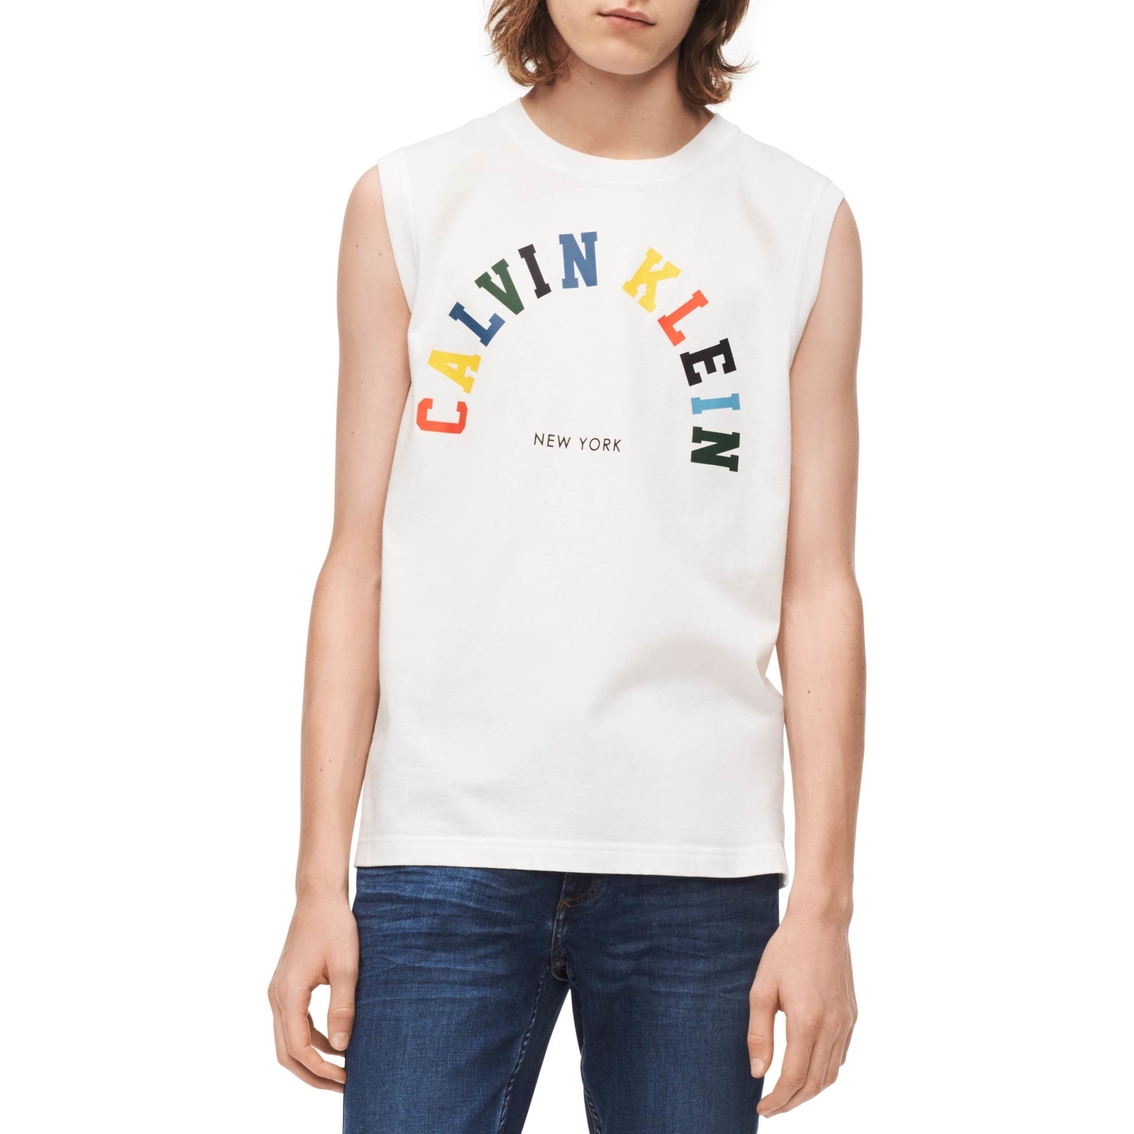 Calvin Klein Pride Tank Top, Tops, Clothing & Accessories